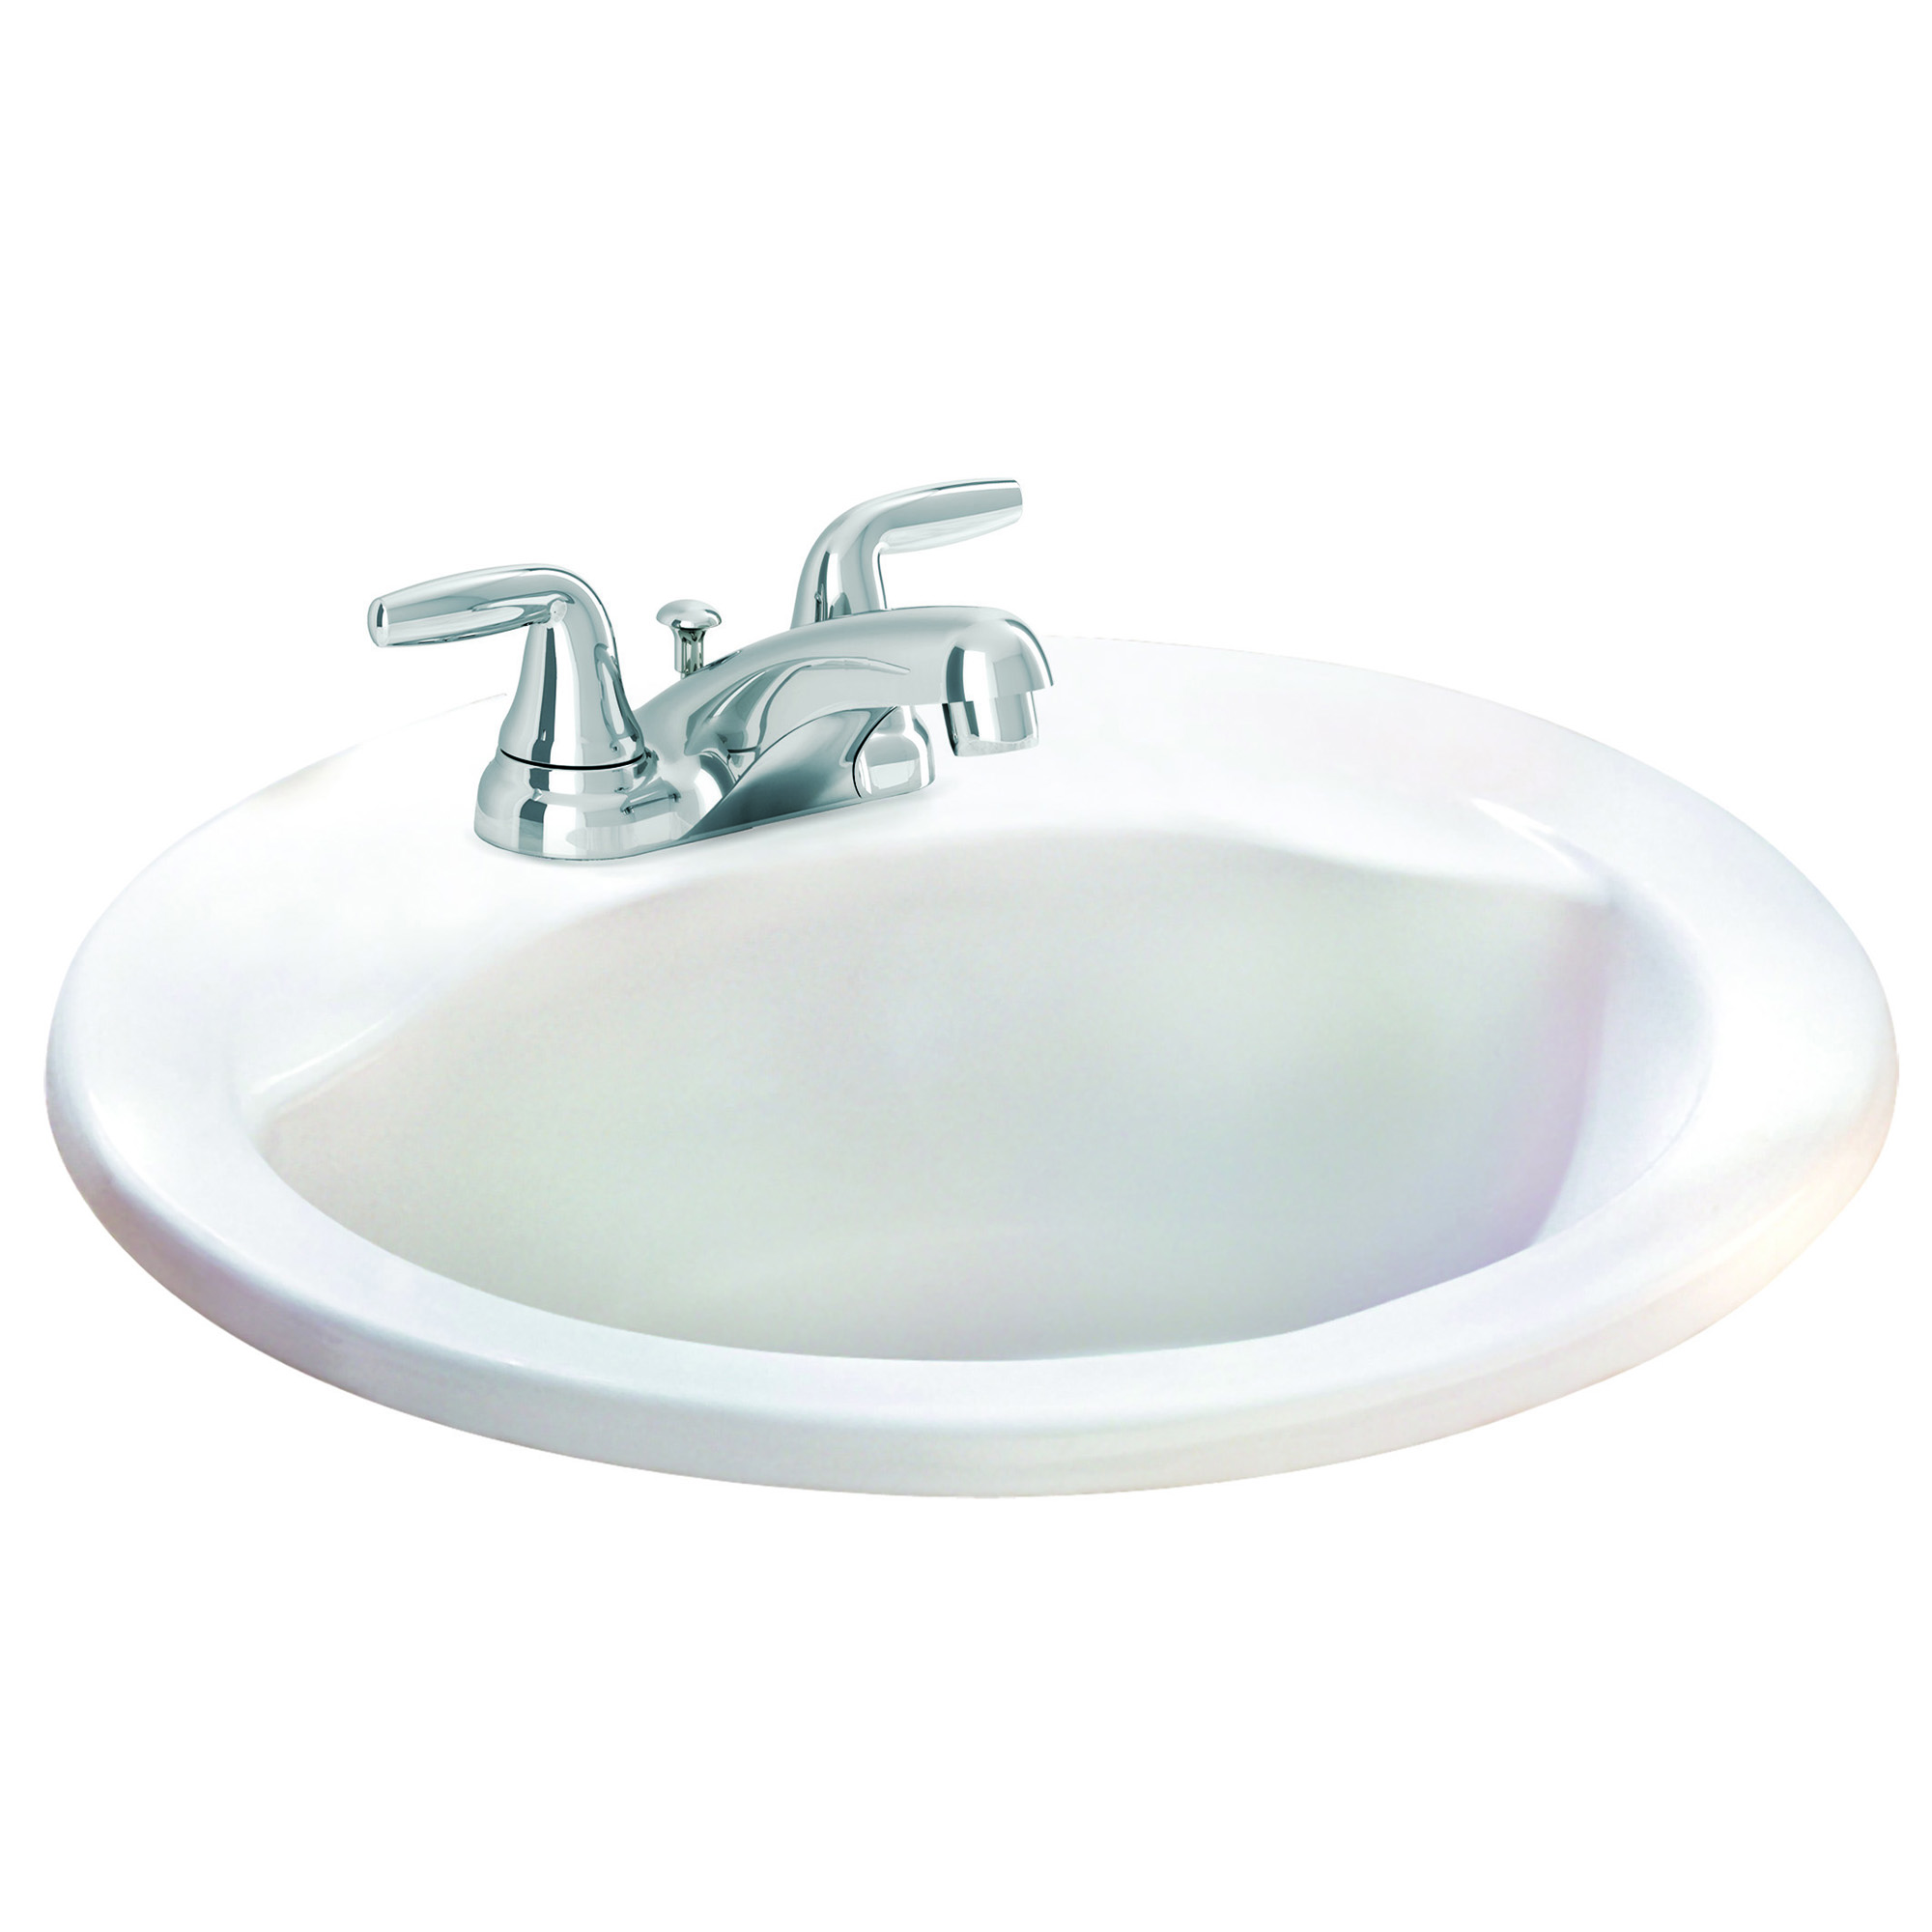 Ravenna Oval Drop-In Bathroom Sink, 4-Inch Centreset Holes